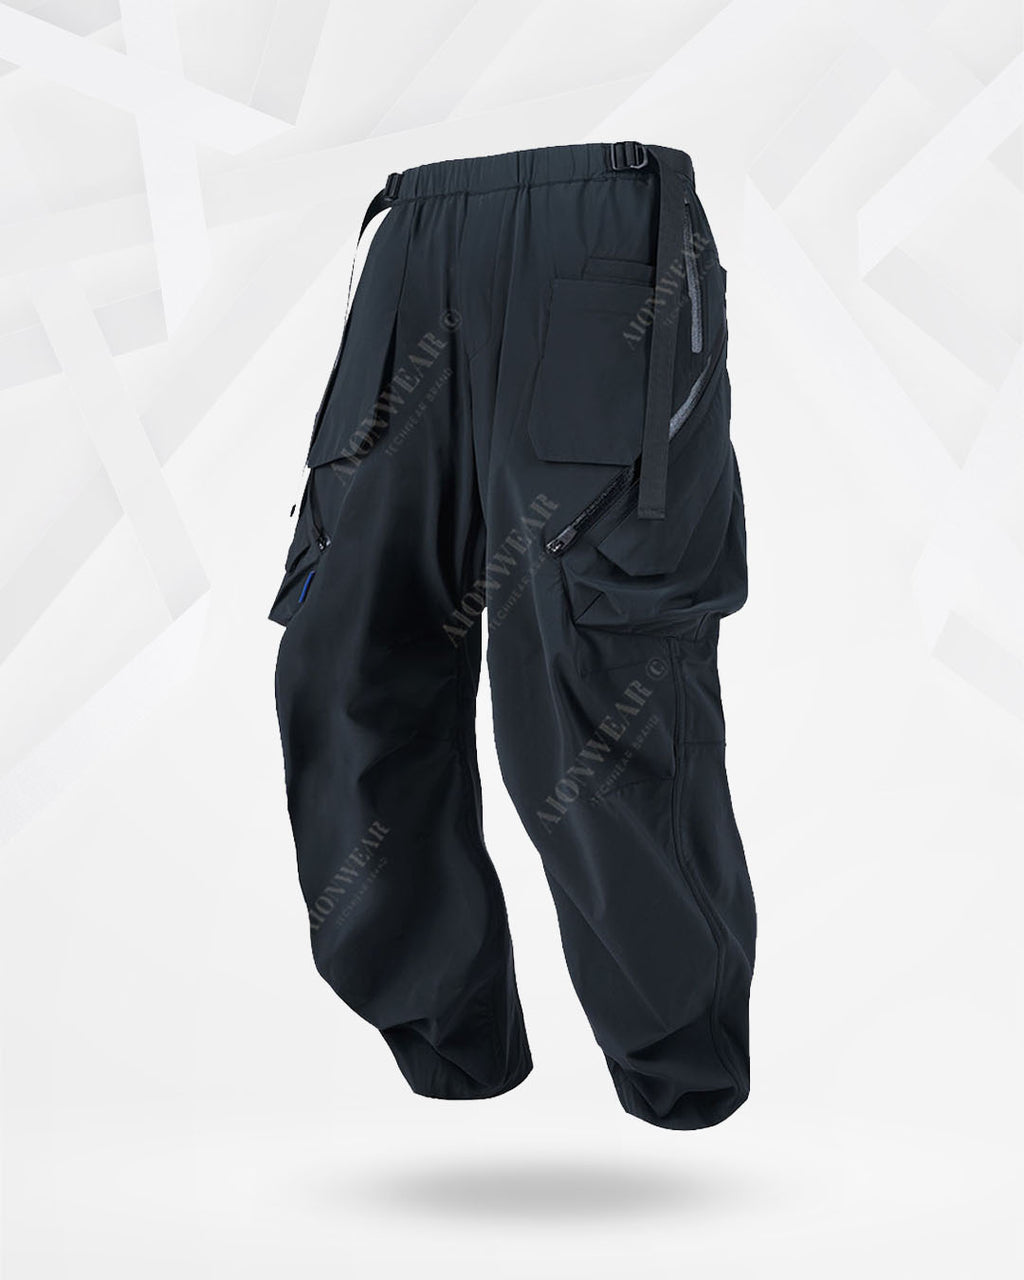 All-Weather Tactical Flex Pants